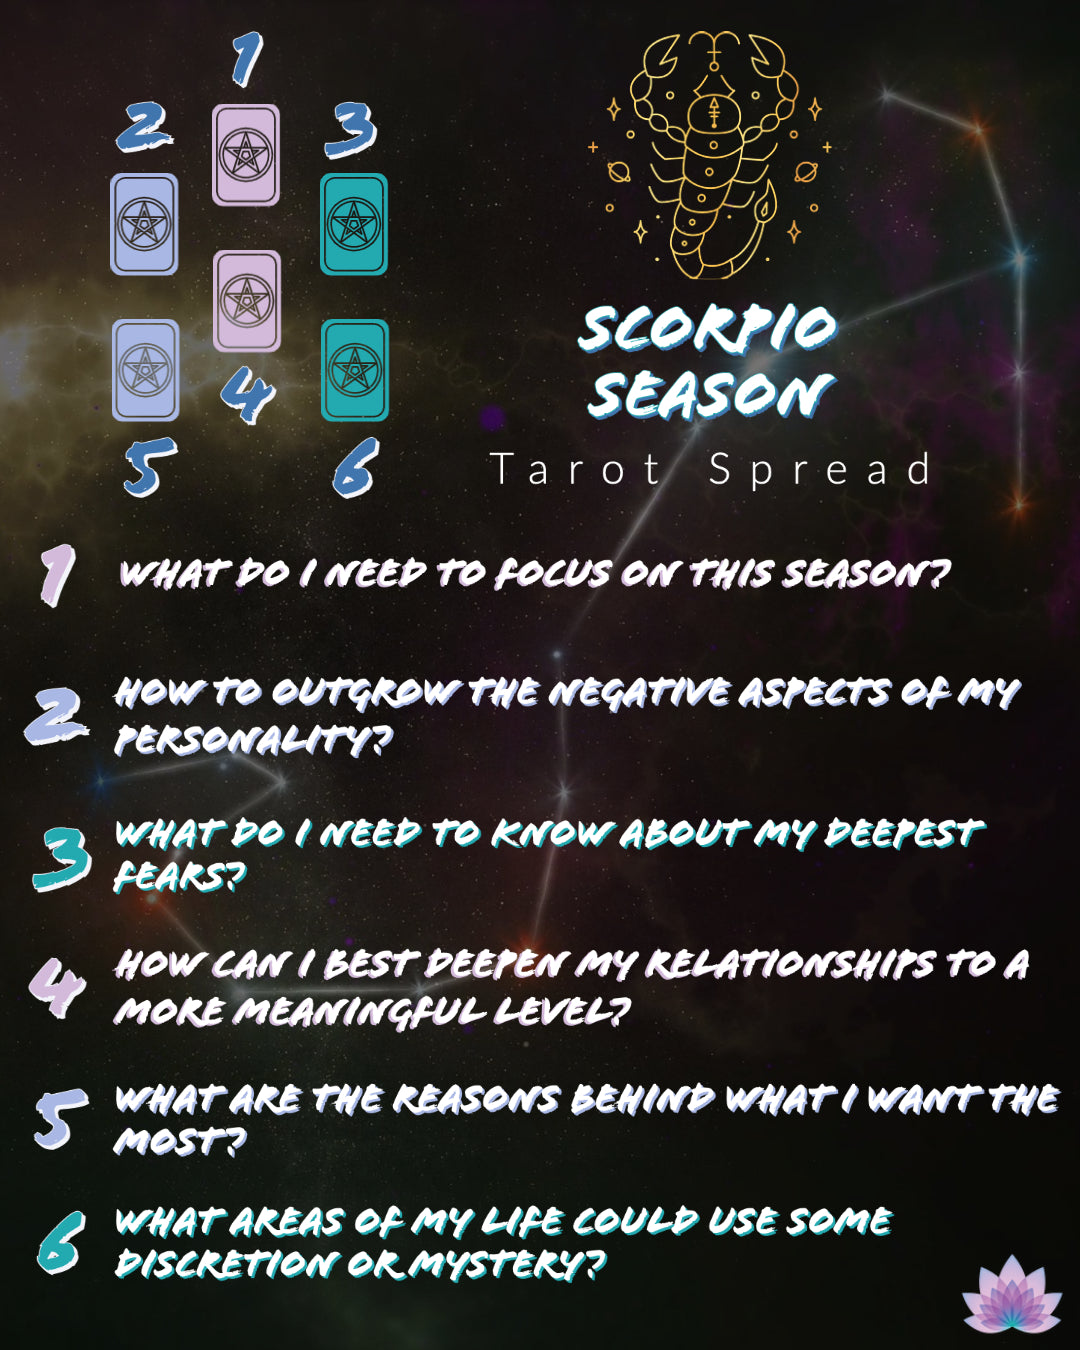 Scorpio Season 2021 Tarot Spread | Apollo Tarot Blog